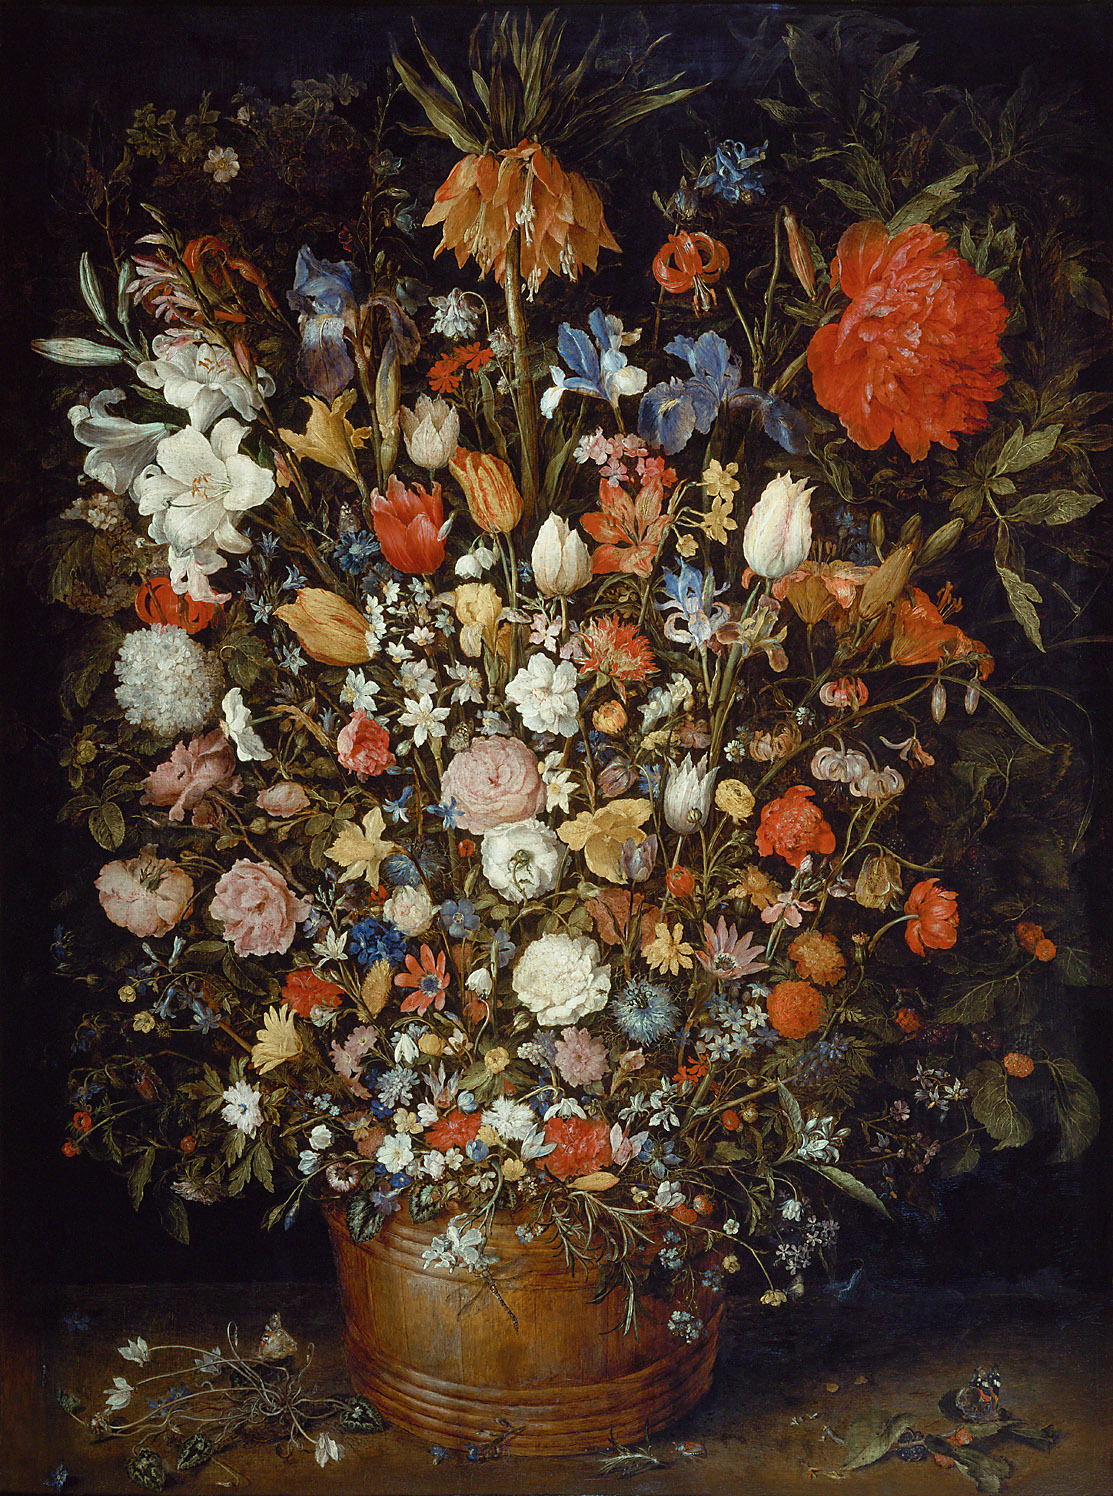 Big Bouquet of Flowers in a Wooden Vessel by Jan Brueghel - 1606/1607 - 97.5 cm x 73 cm Kunsthistorisches Museum